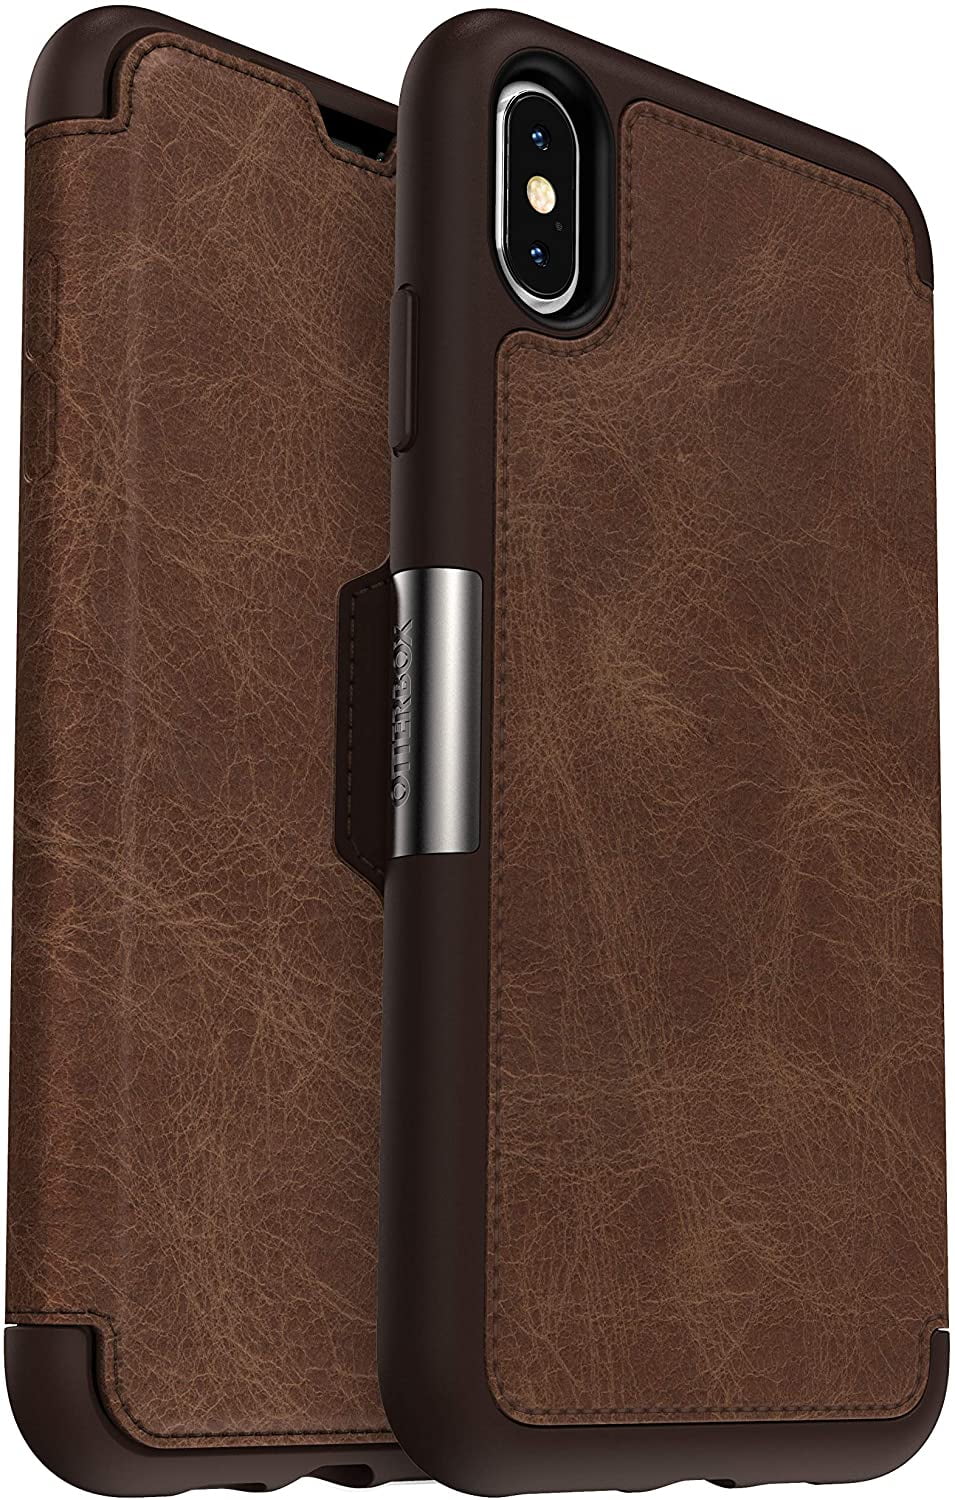 Iphone 13 pro max leather folio case - rentalsnibht